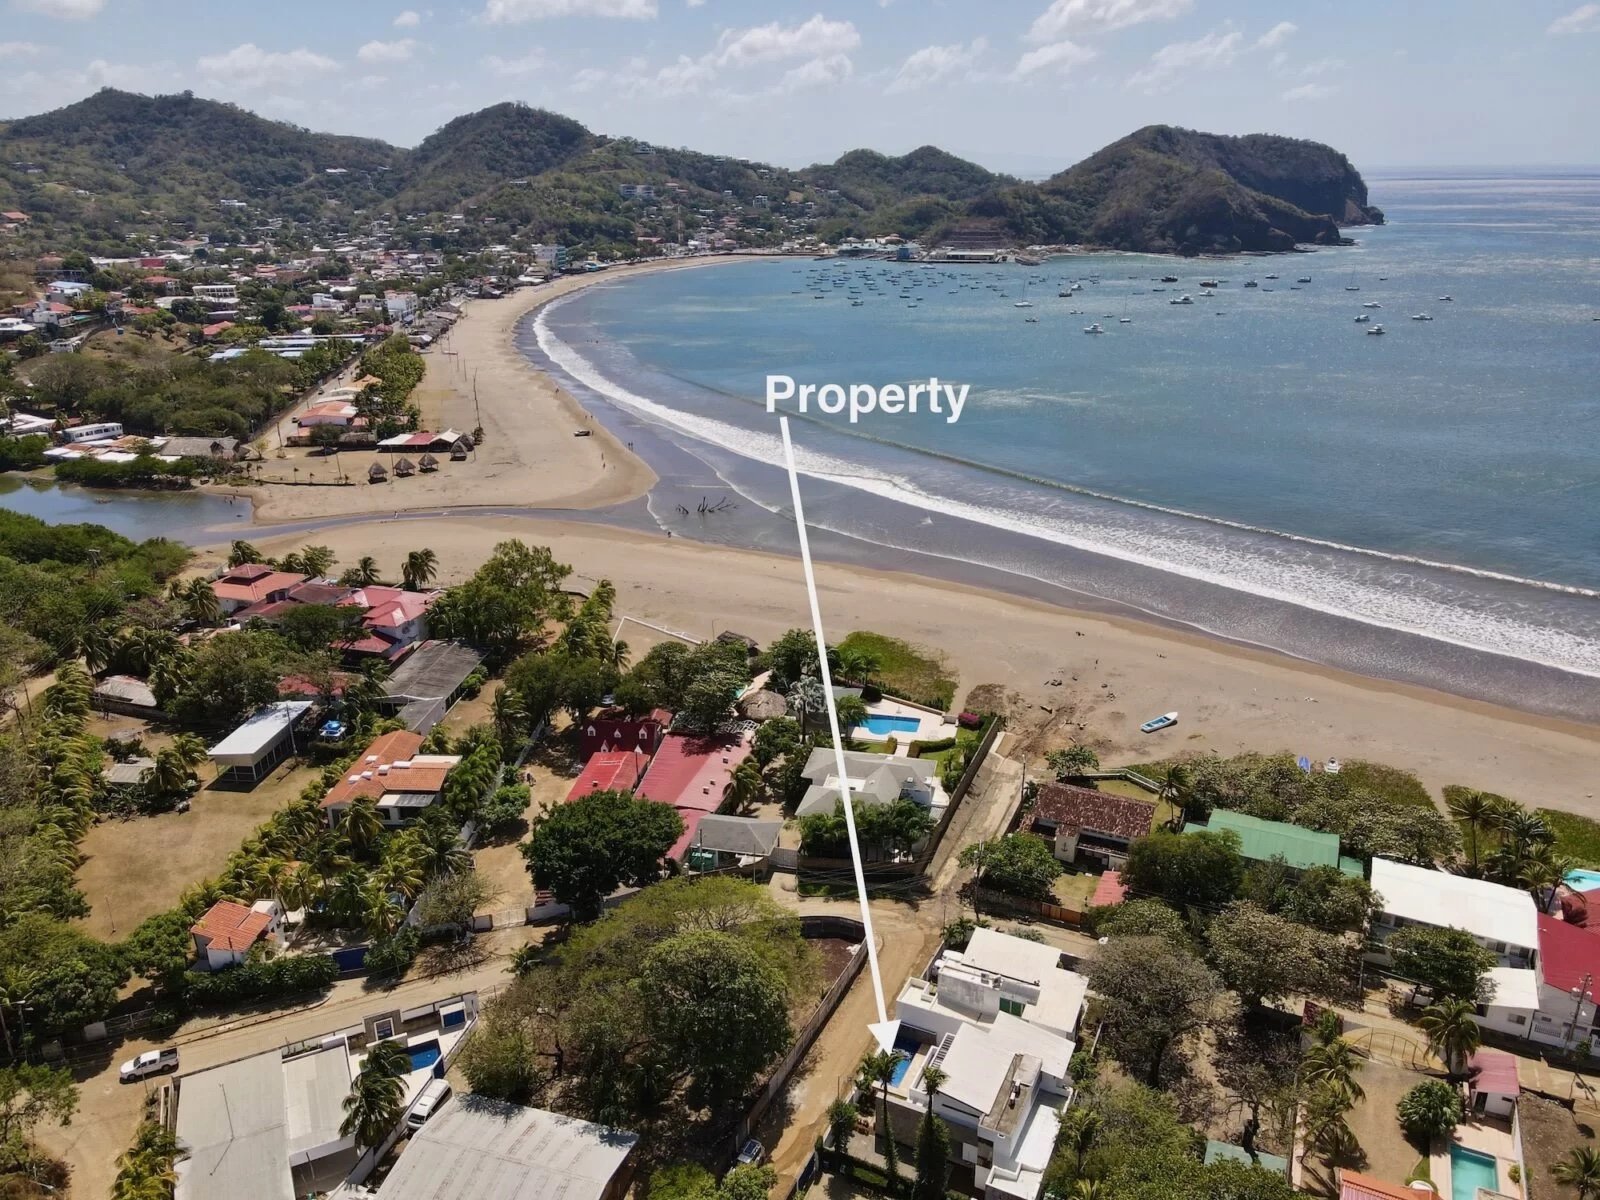 Beach Home House Property For Sale San Juan Del Sur Nicaragua Ocean View Luxury Real Estate 1.jpeg.jpeg